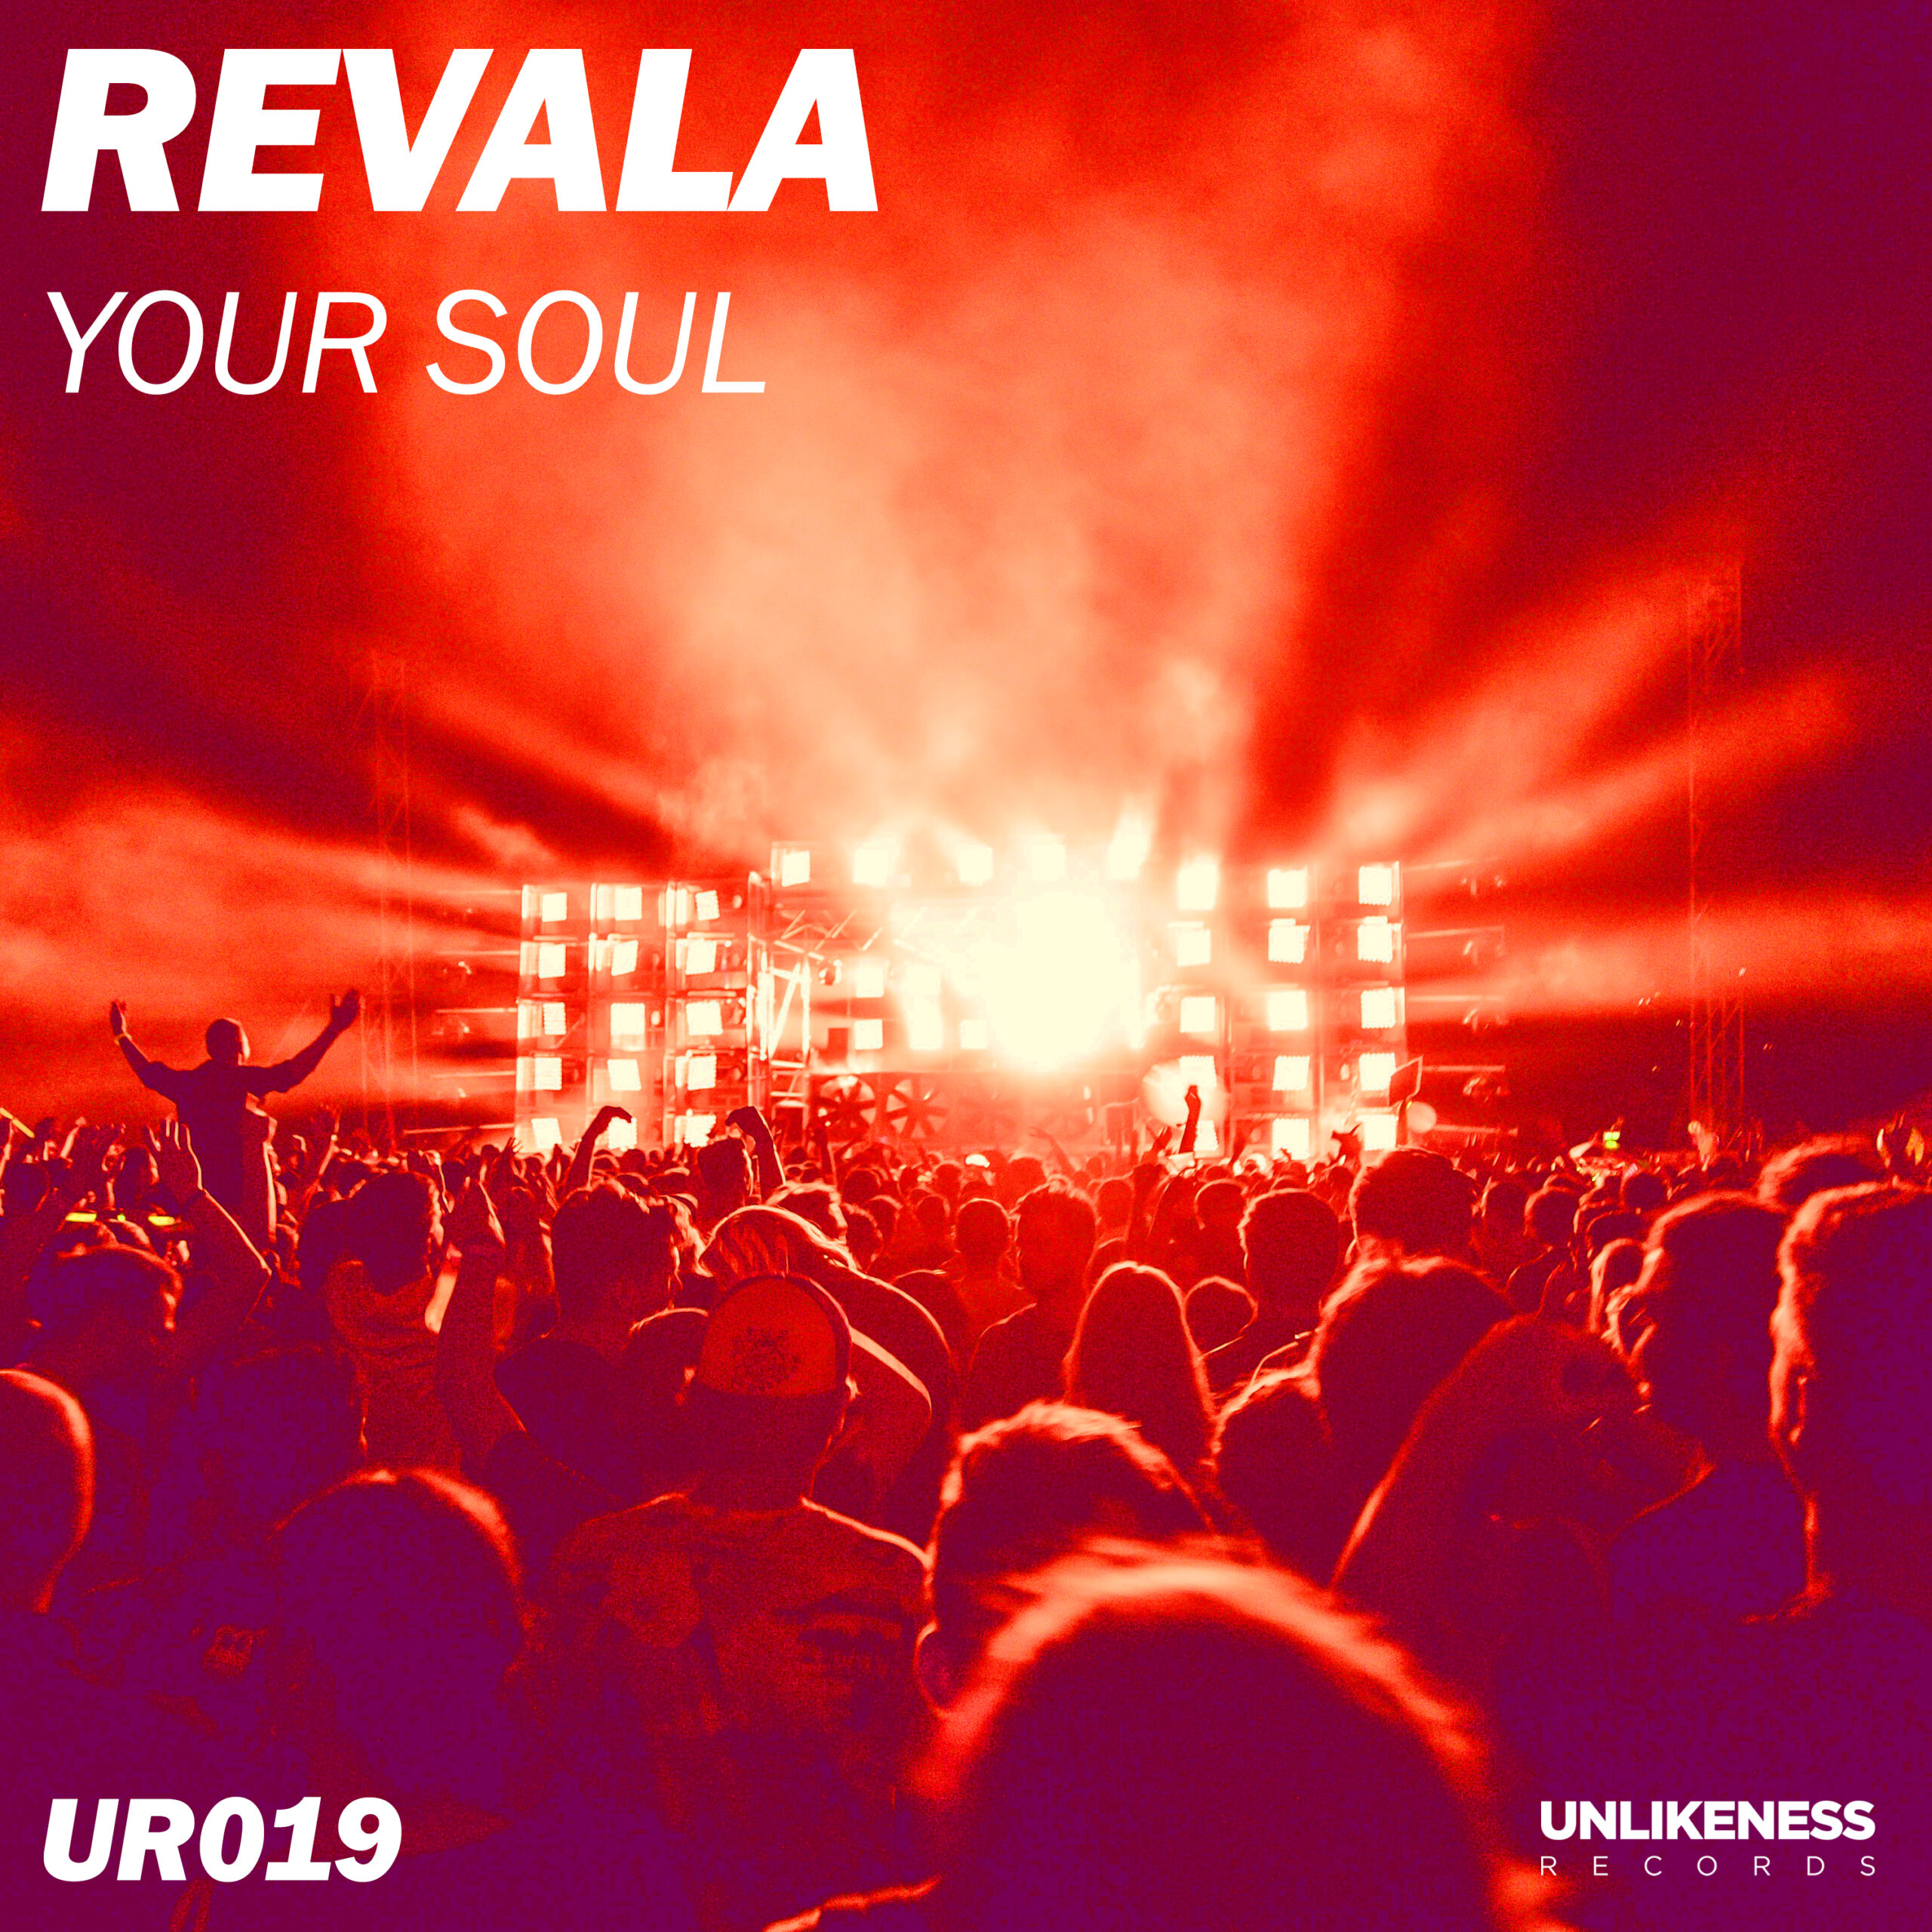 UR019 REVALA - YOUR SOUL